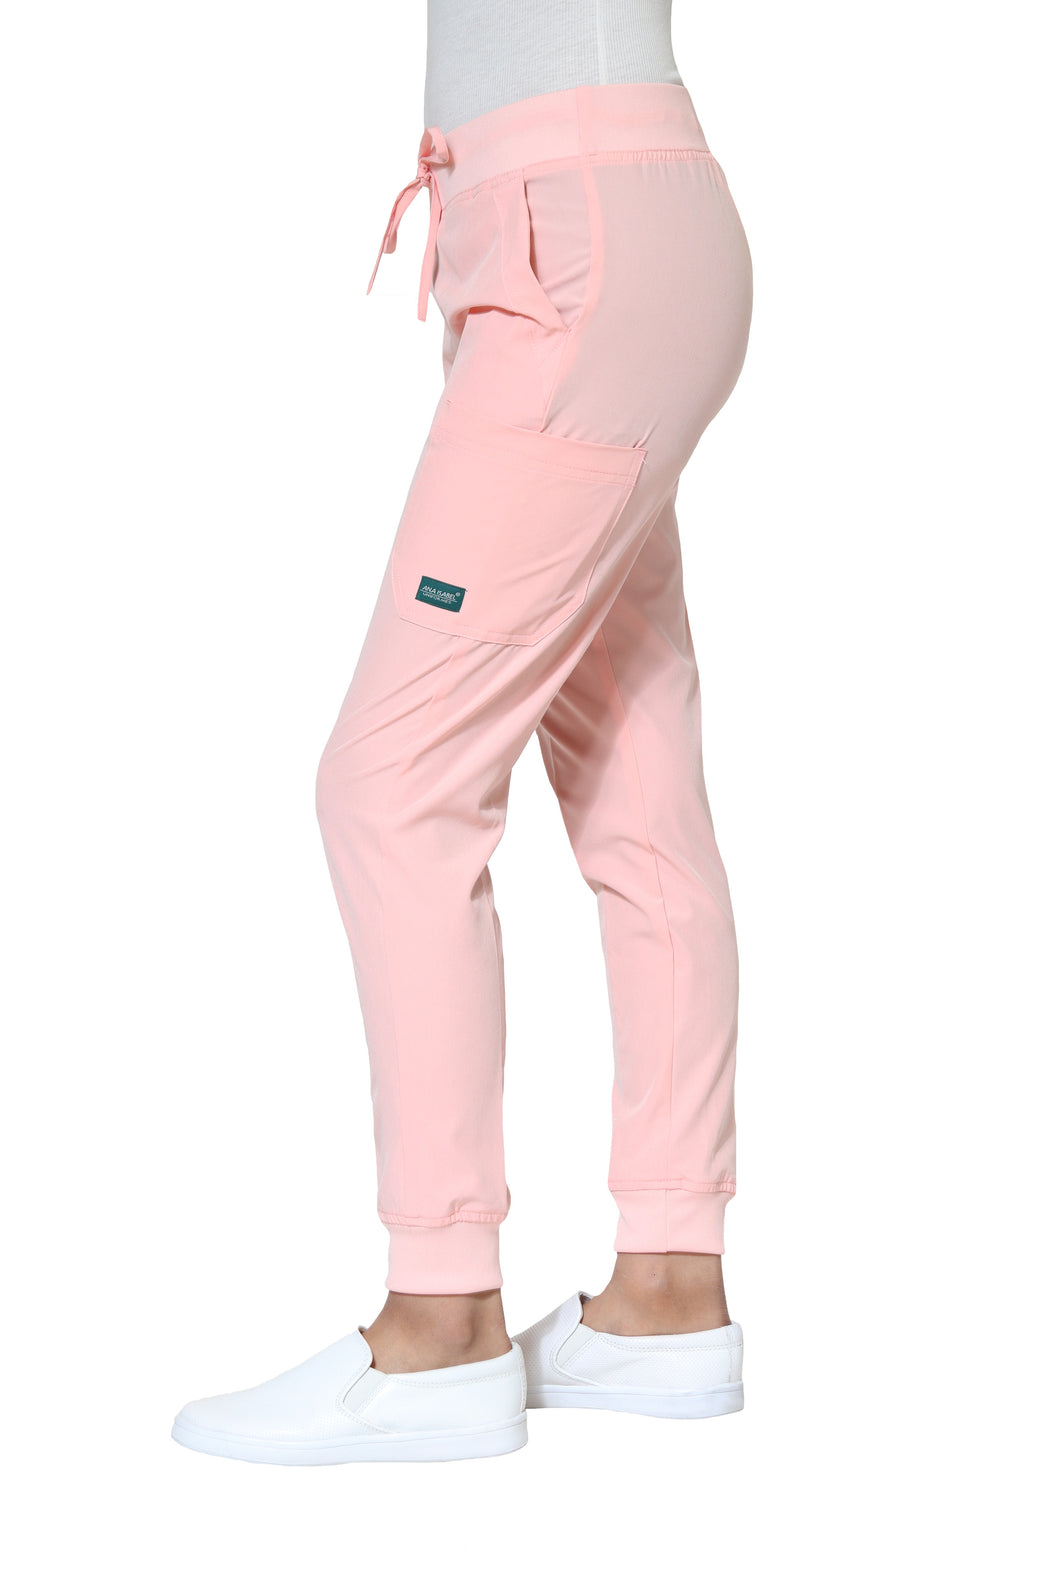 Pantalón Pant JOGGER EV-125 REPELENTE A FLUIDOS-Color ROSA PASTEL Dama-Ana Isabel Uniformes